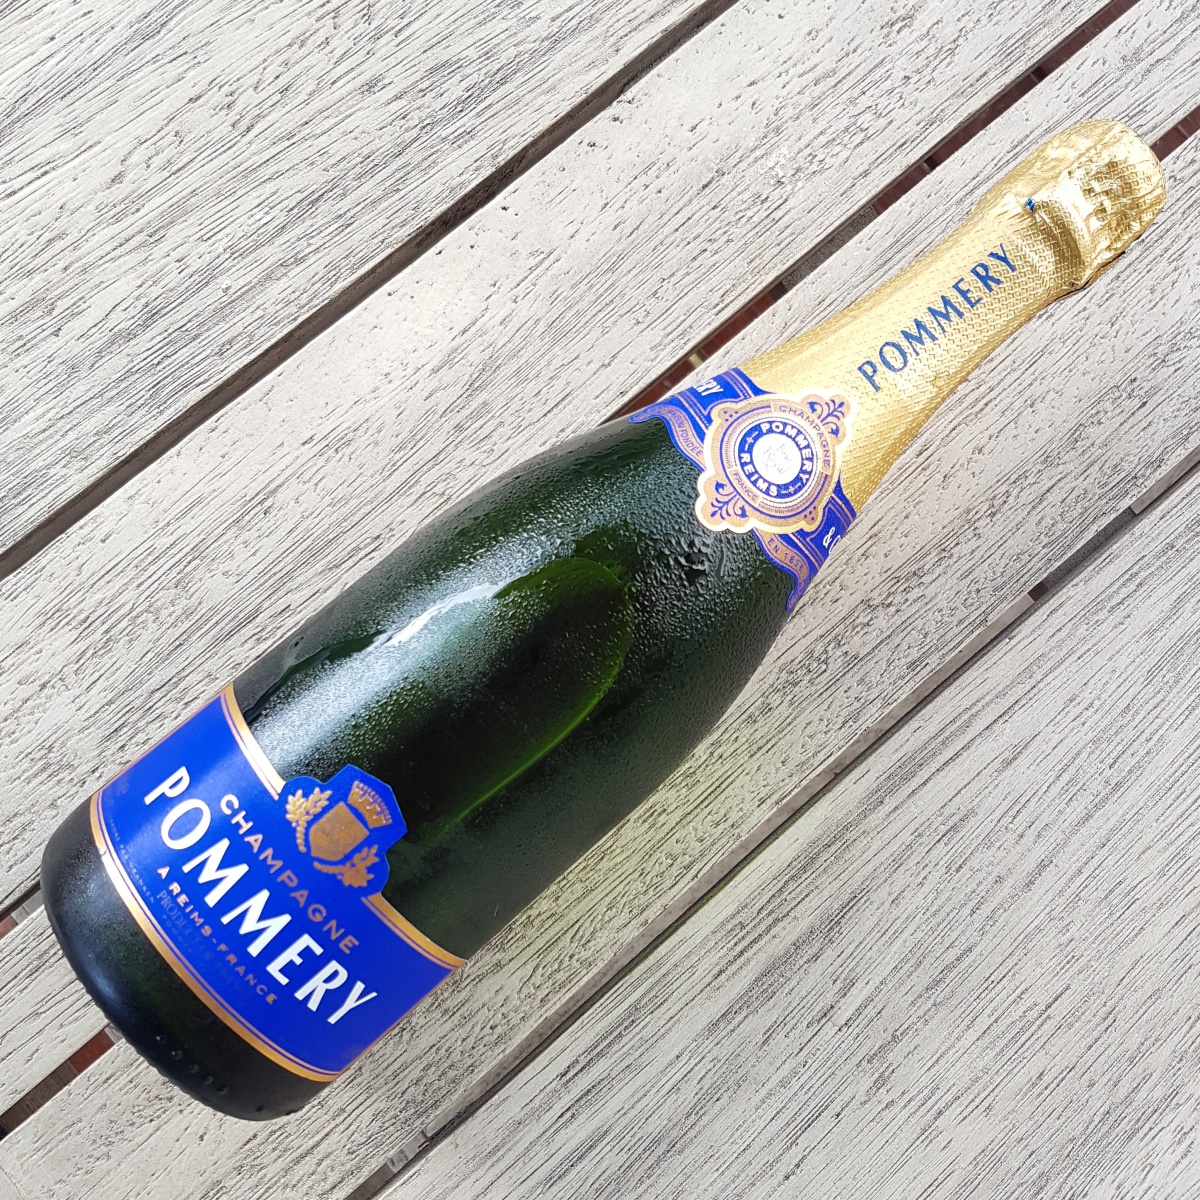 Pommery Royal Brut Tips Review: – NV Champagne